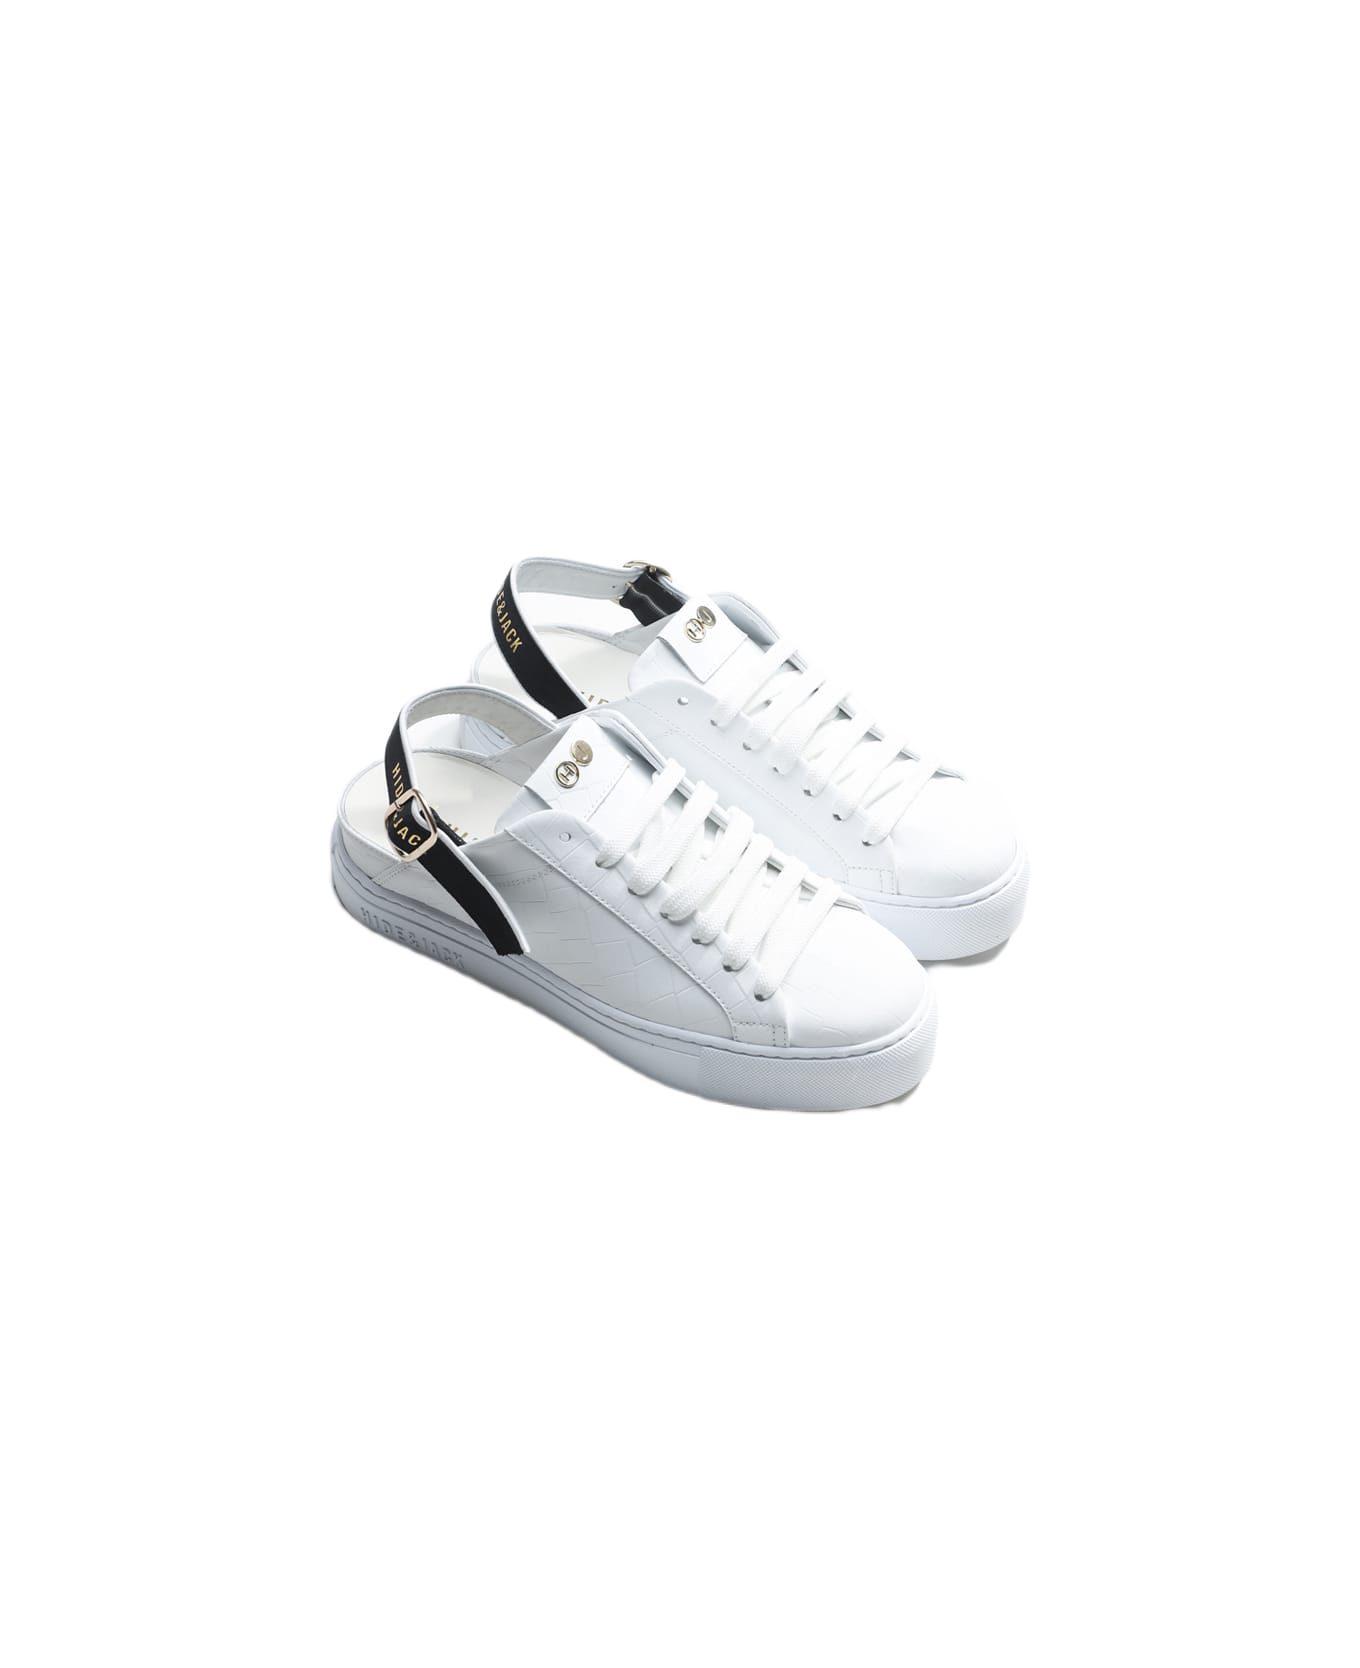 Hide&Jack Low Top Sneaker - Sabot White